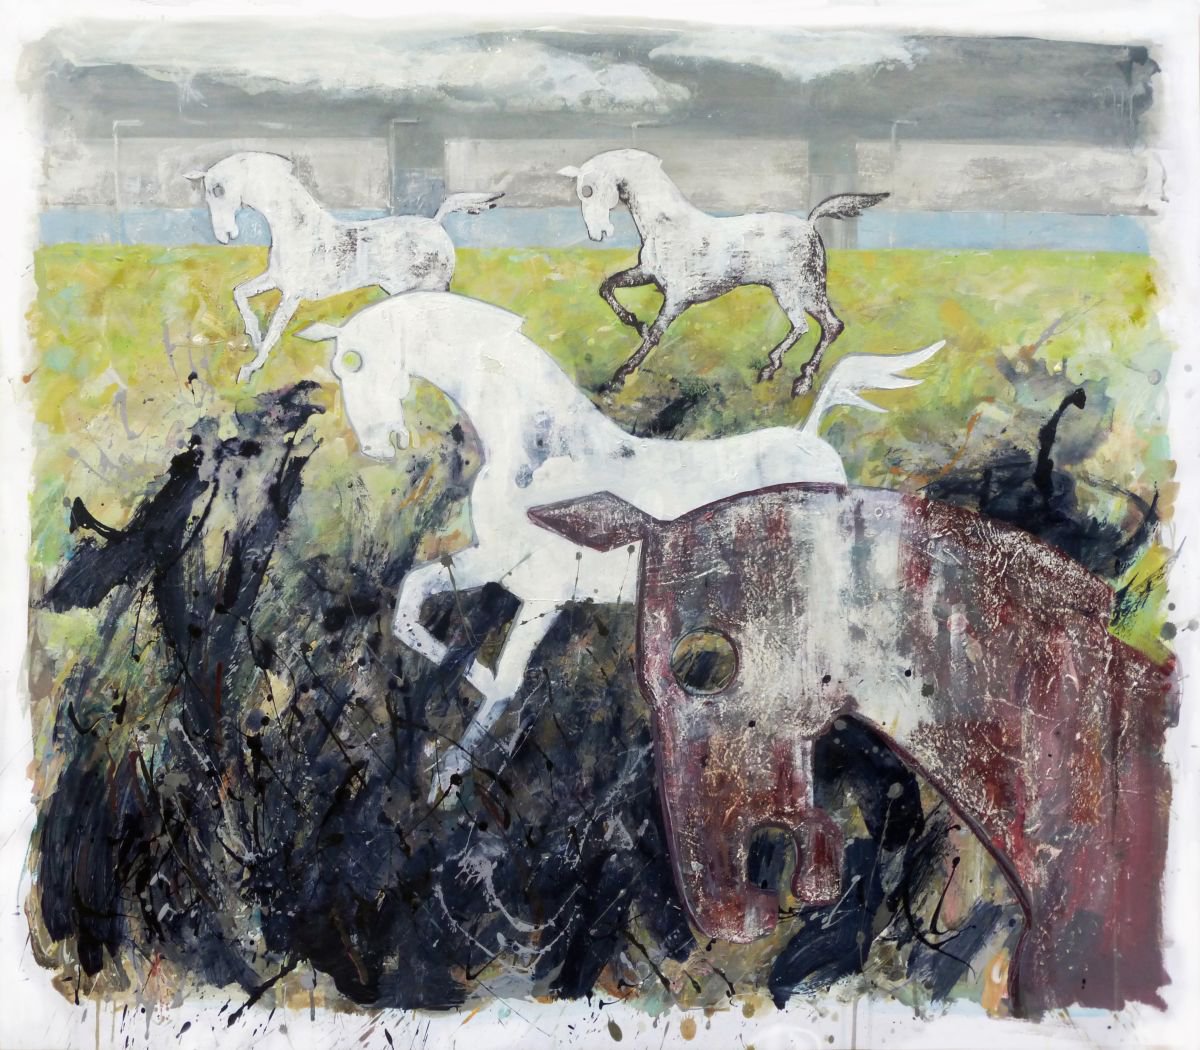 England - white horse 2 by John Sharp